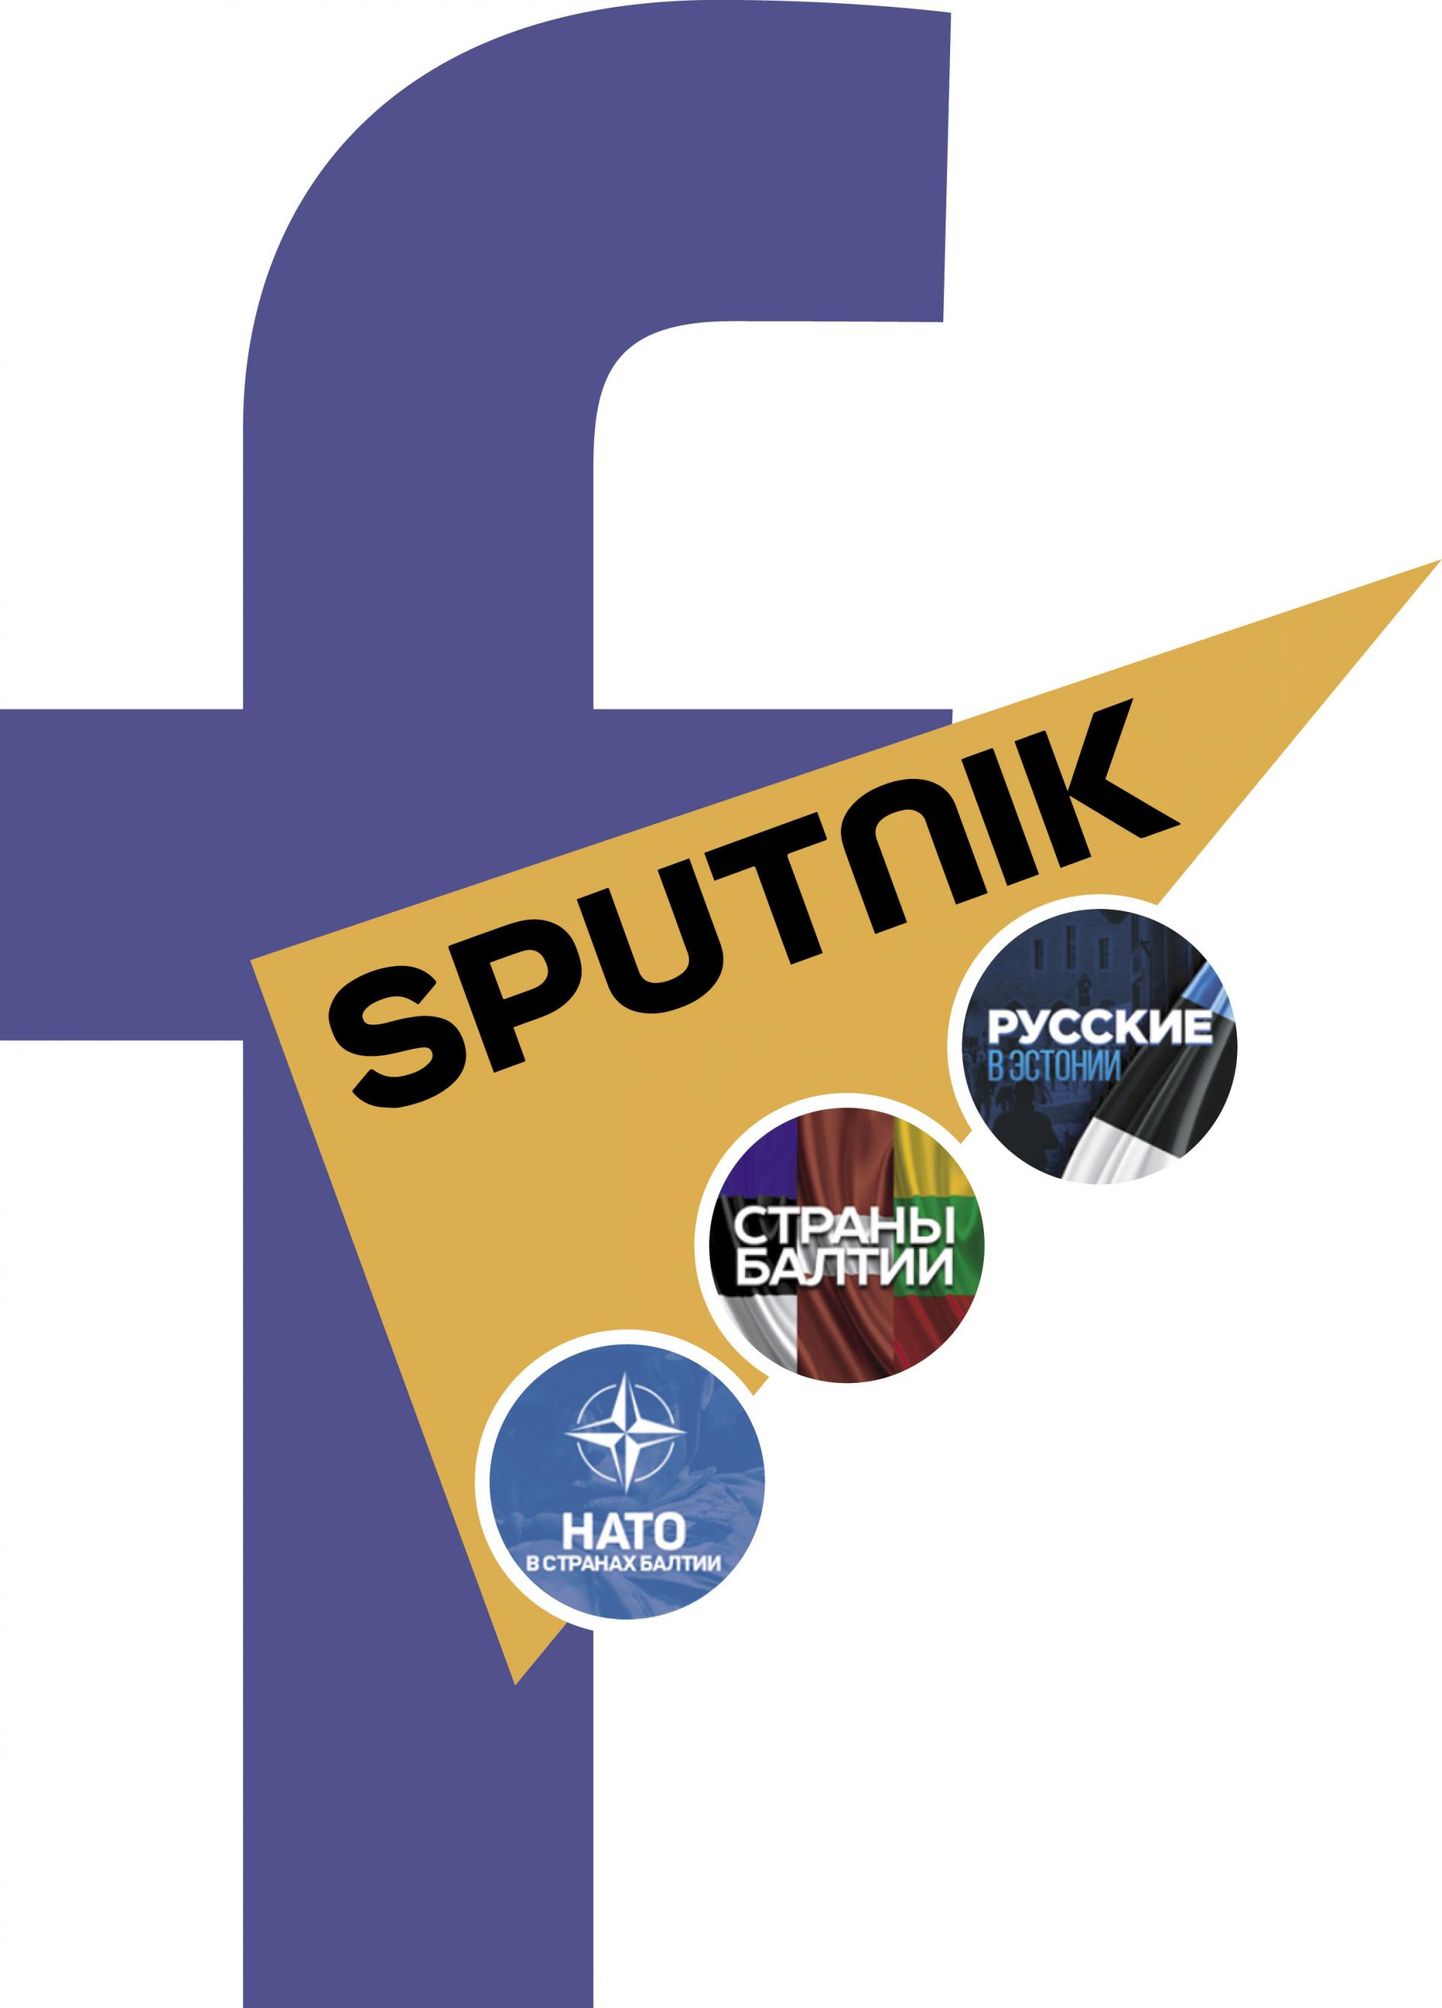 Sputnik’s secret network had 13 pages aimed at Estonia.